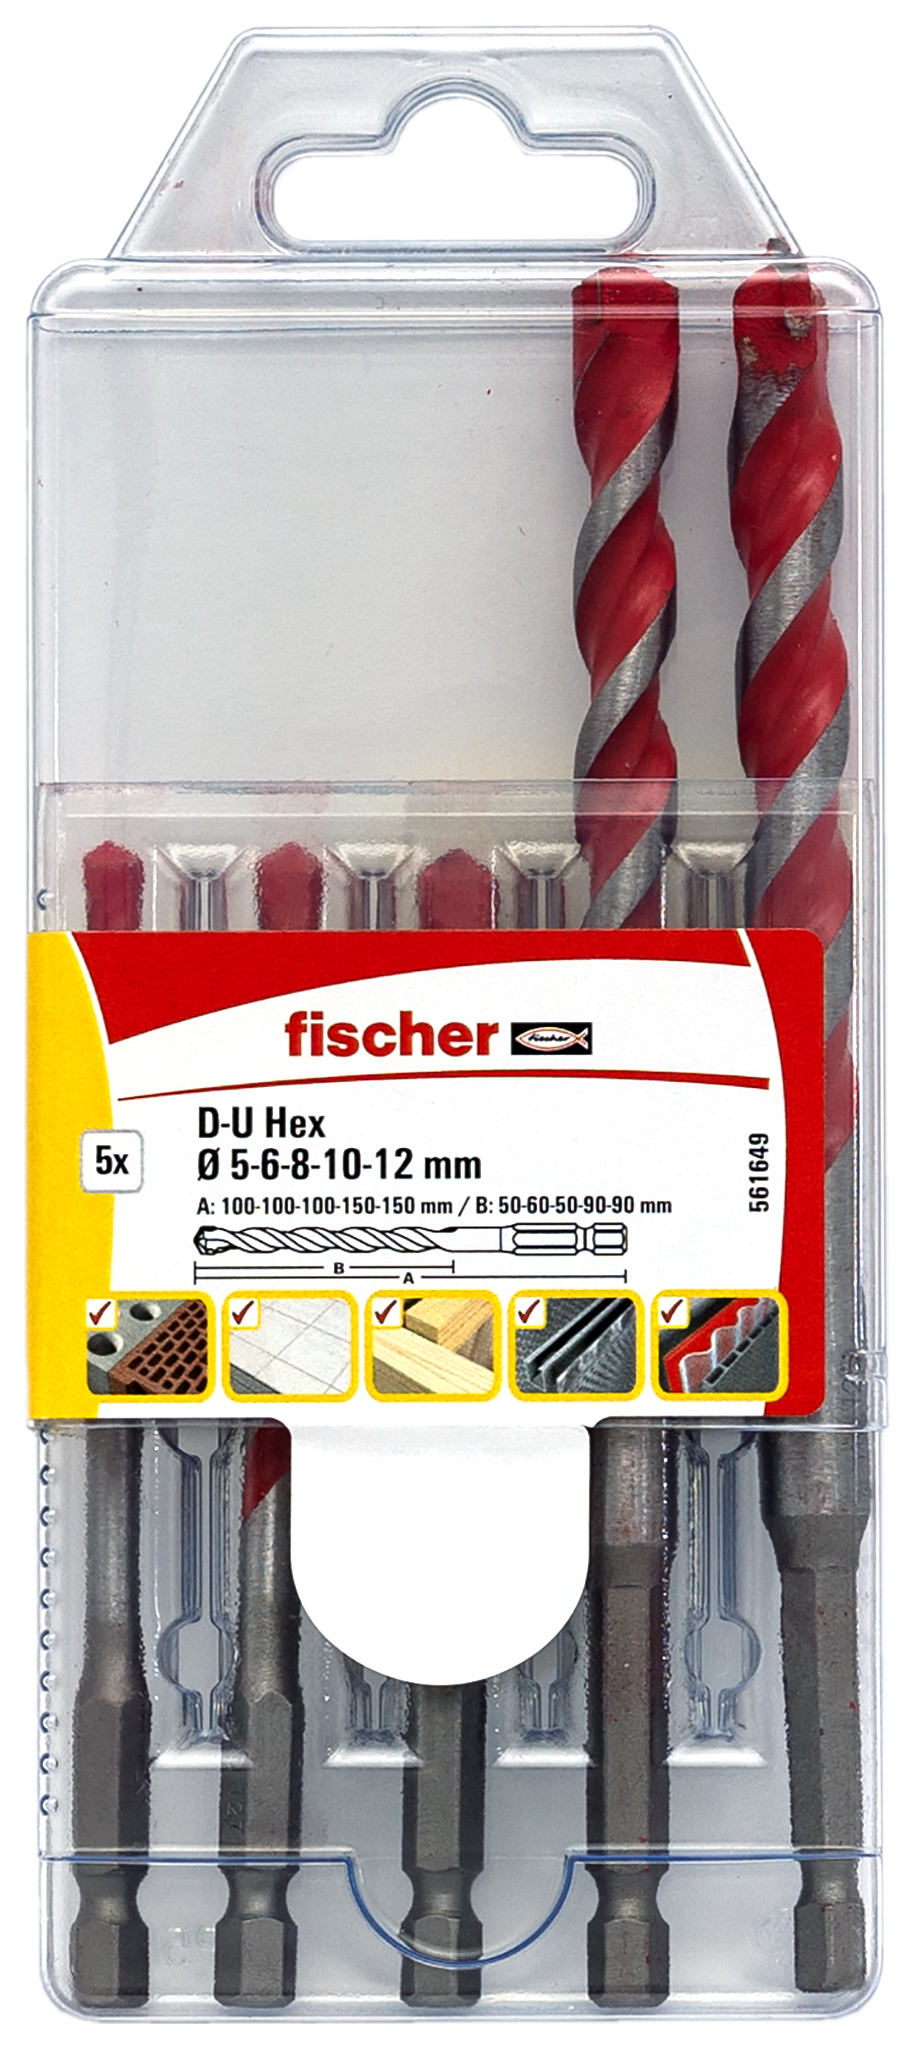 fischer Set 5 punte trapano universali D-U HEX 5-12mm per muro, legno, metallo (5 Pz.) fie3936.